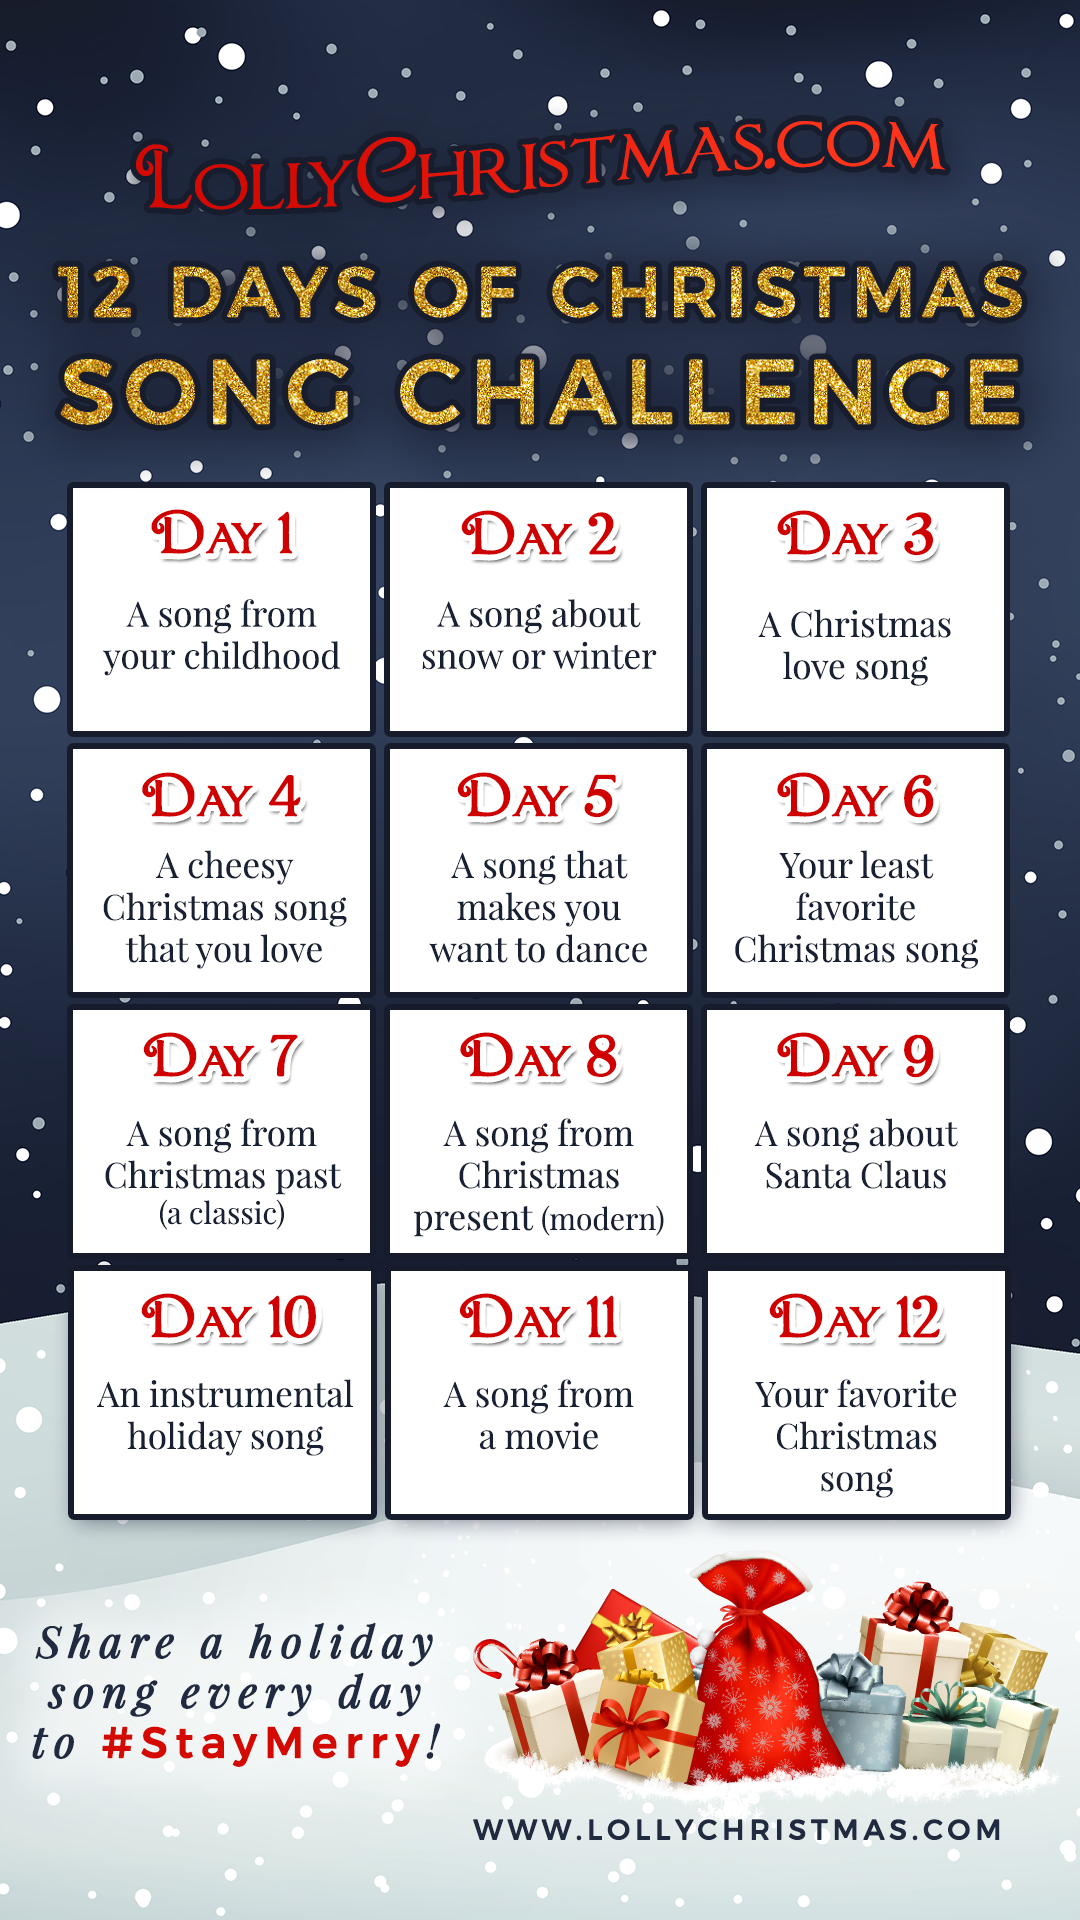 Lolly Christmas | 12 Days of Christmas Song Challenge